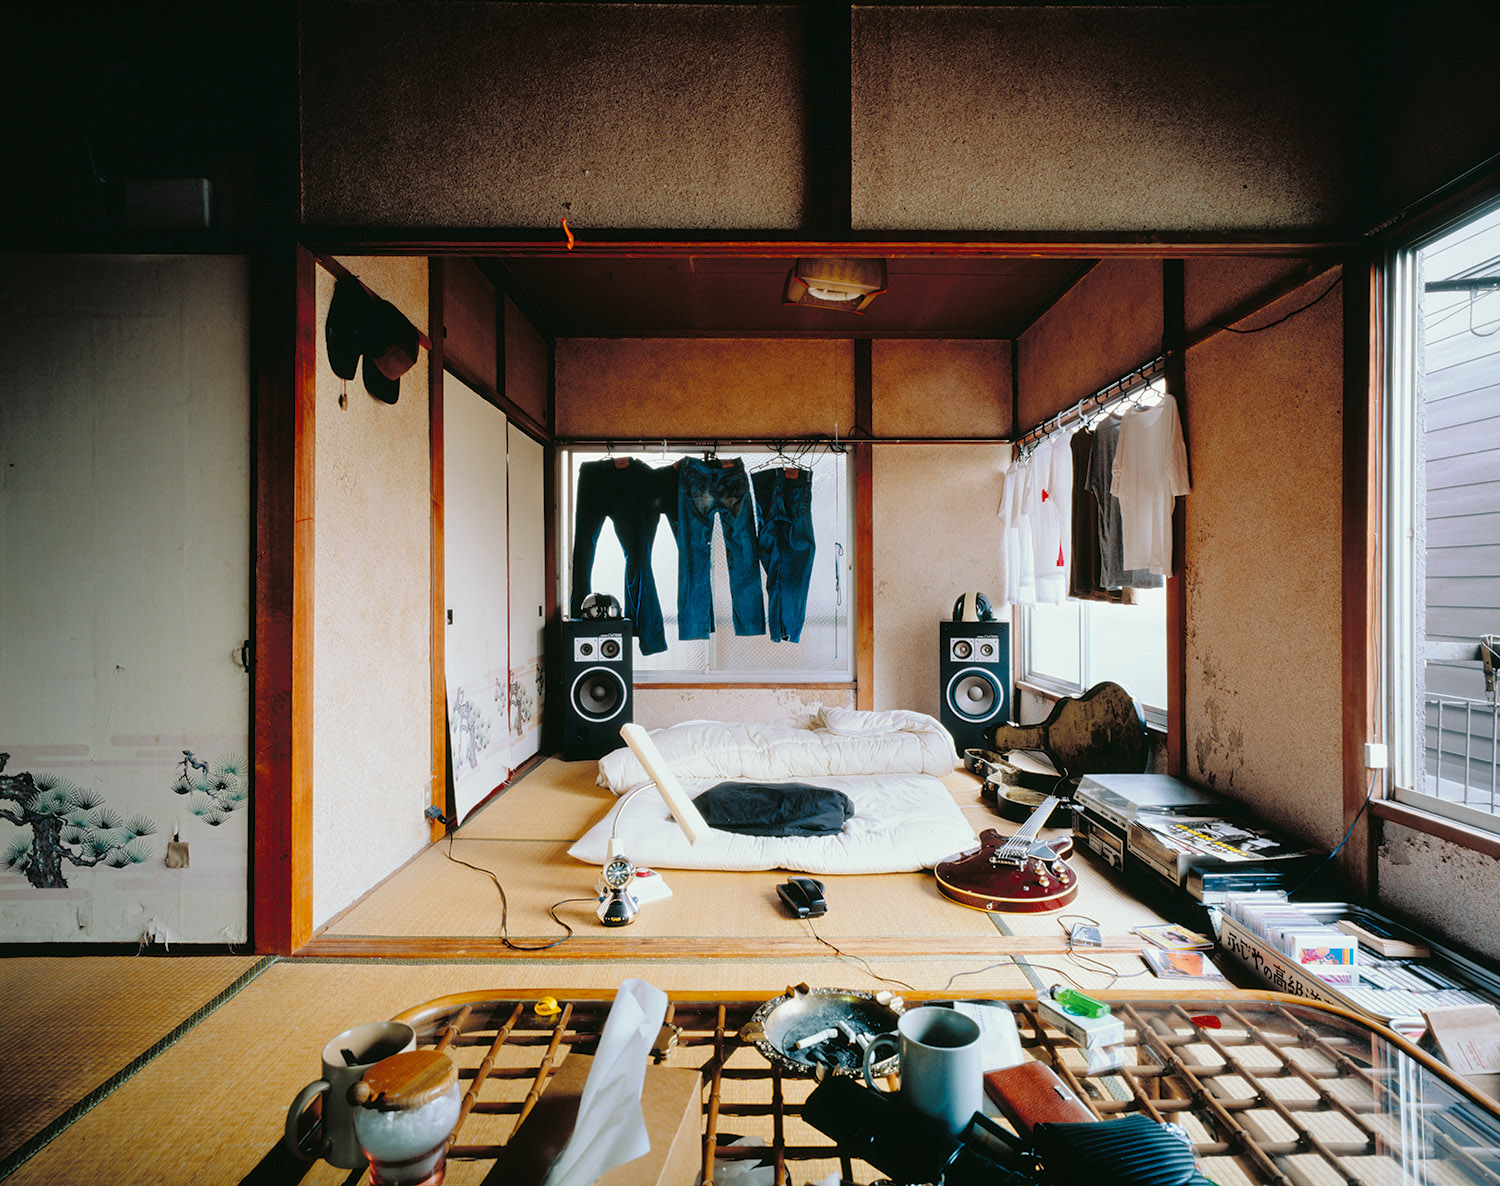 Kyoichi Tsuzuki, Tokyo Style, Tokyo, Japan, 1993, from the series Tokyo Style

Courtesy the artist